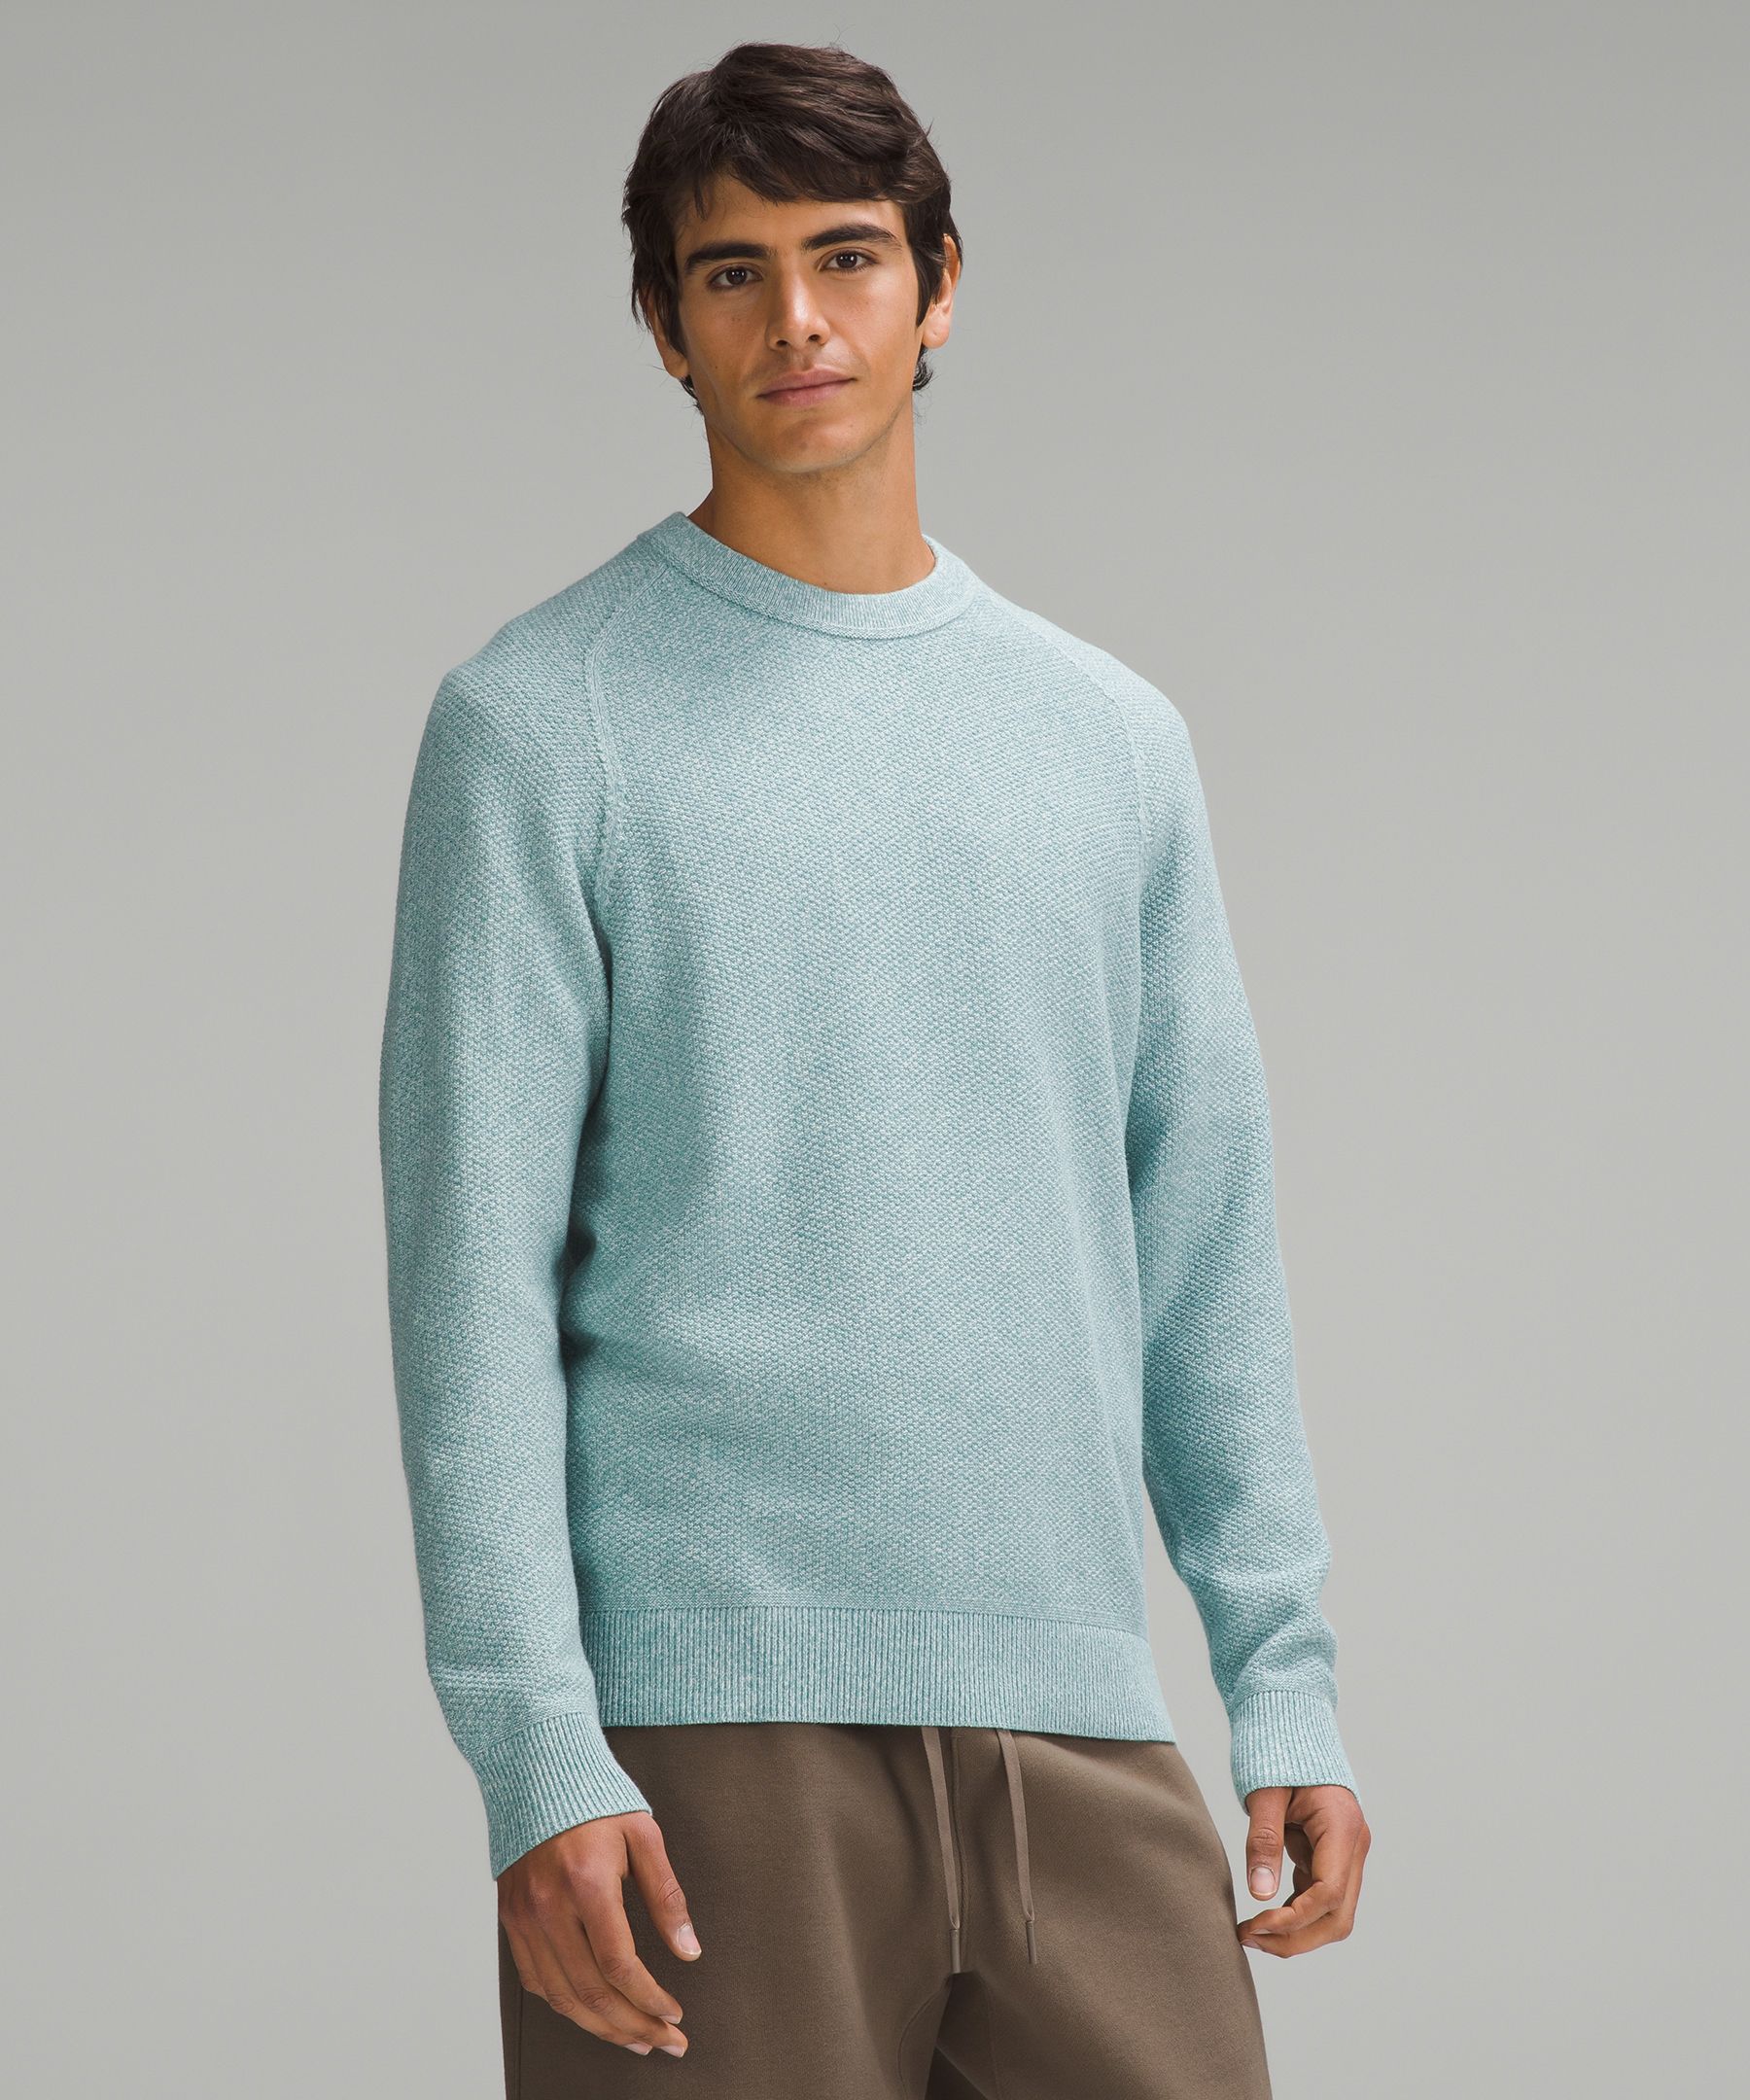 Textured Sweater-Jacket